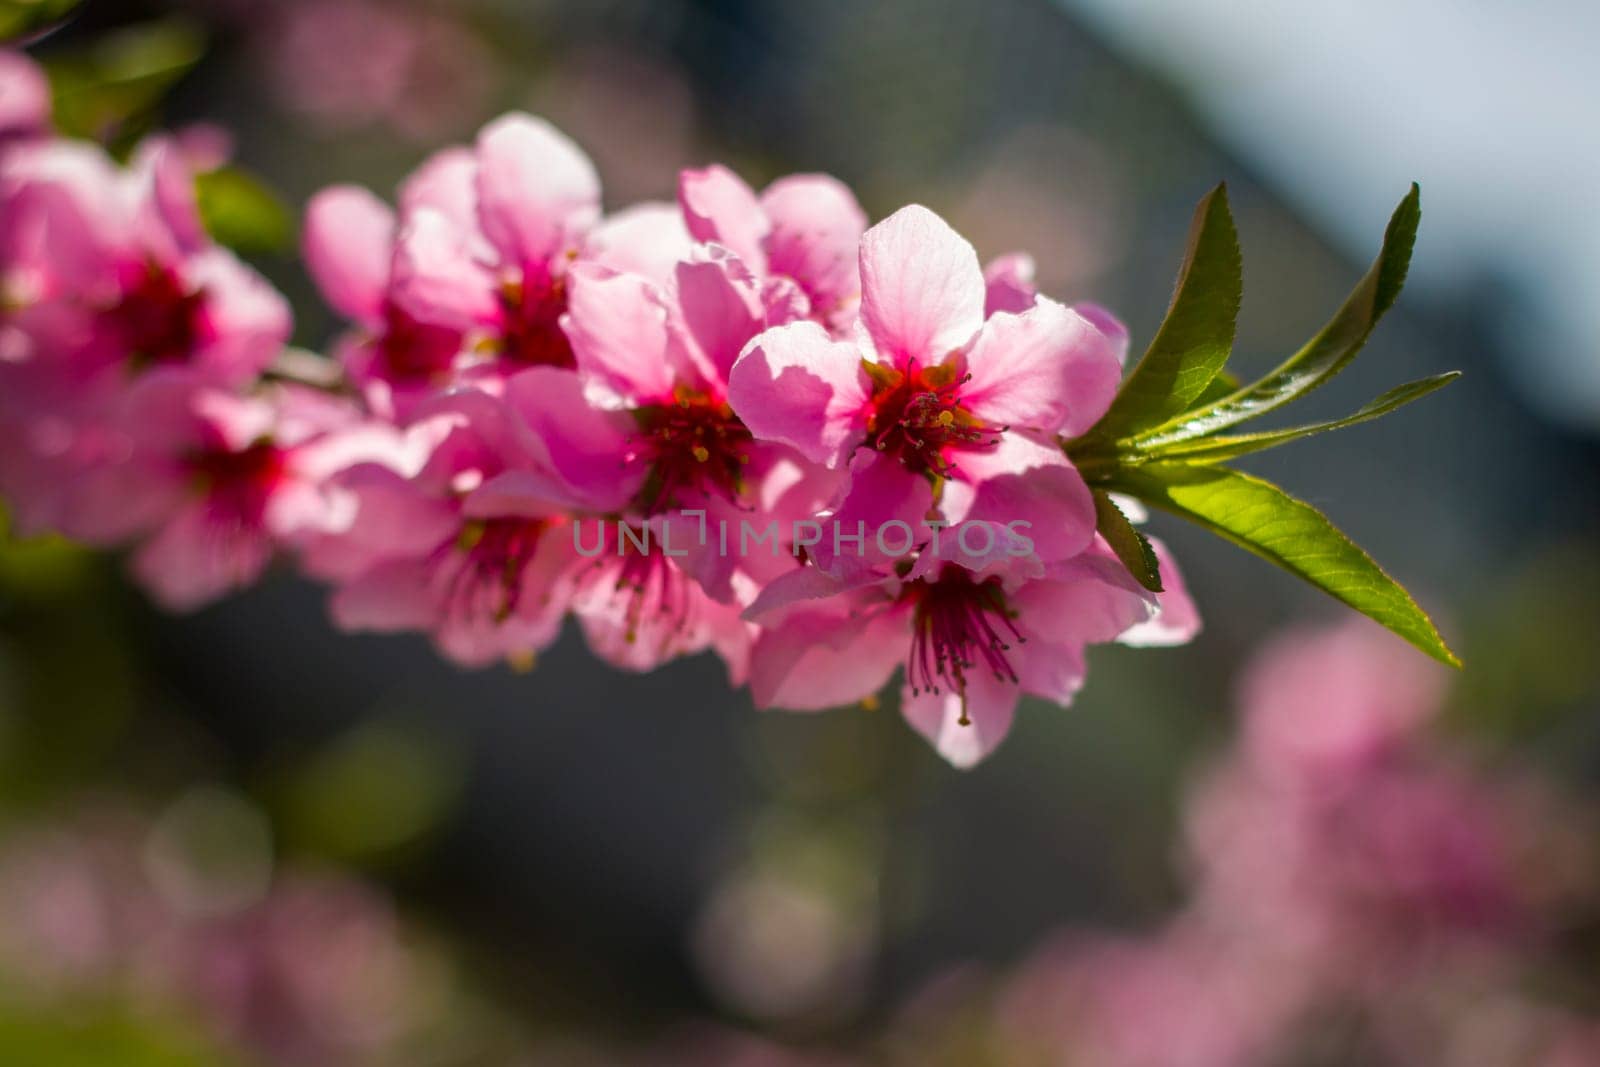 Spring nectarine peach blossom on branch. Agriculture beautiful season farming springtime landscape